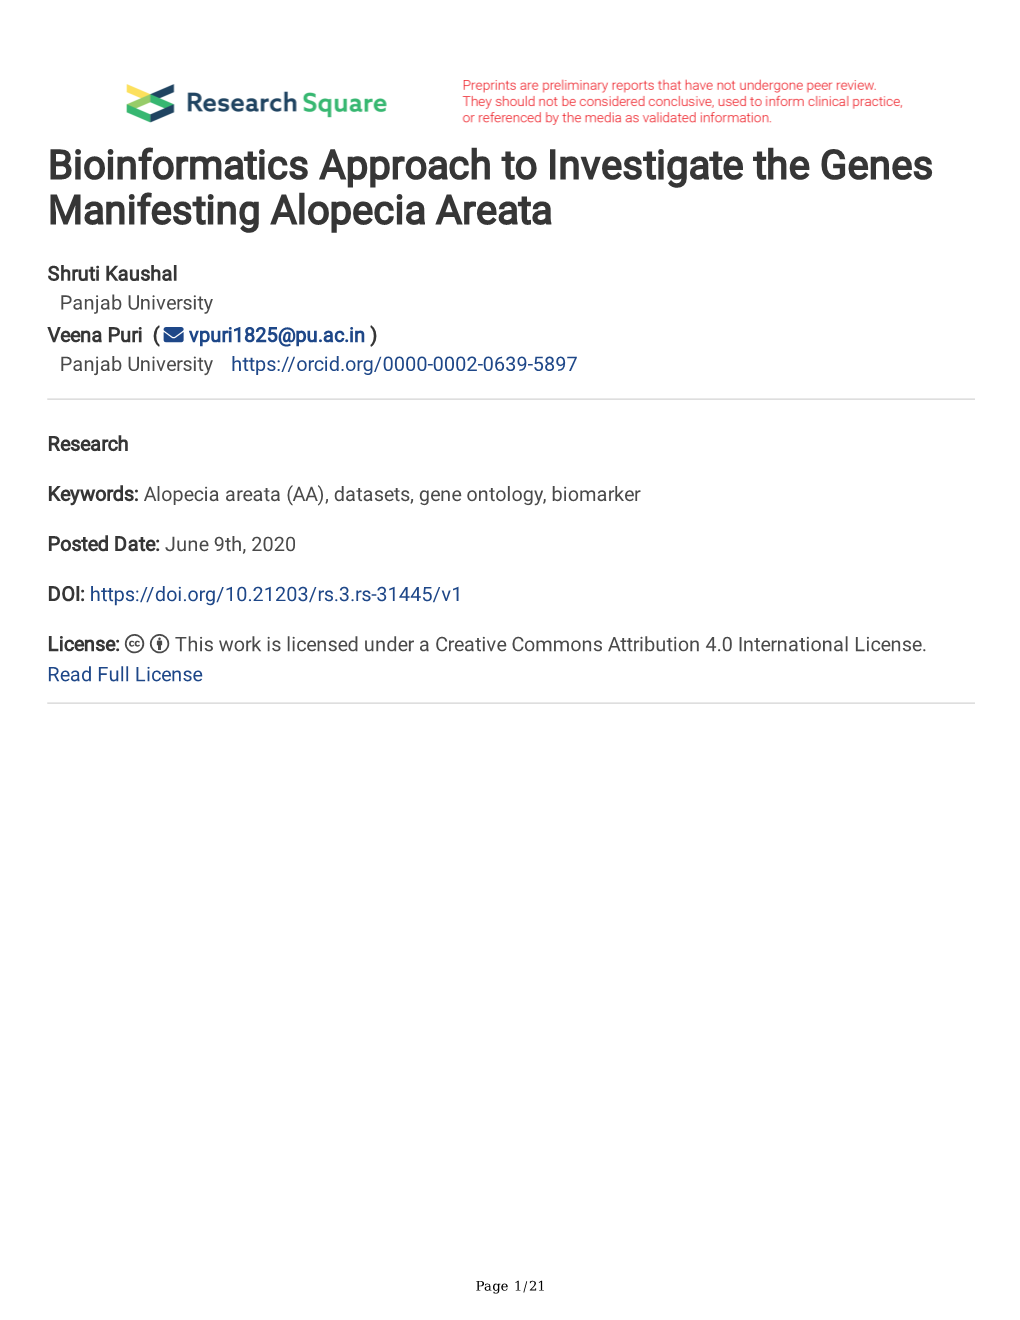 Bioinformatics Approach to Investigate the Genes Manifesting Alopecia Areata